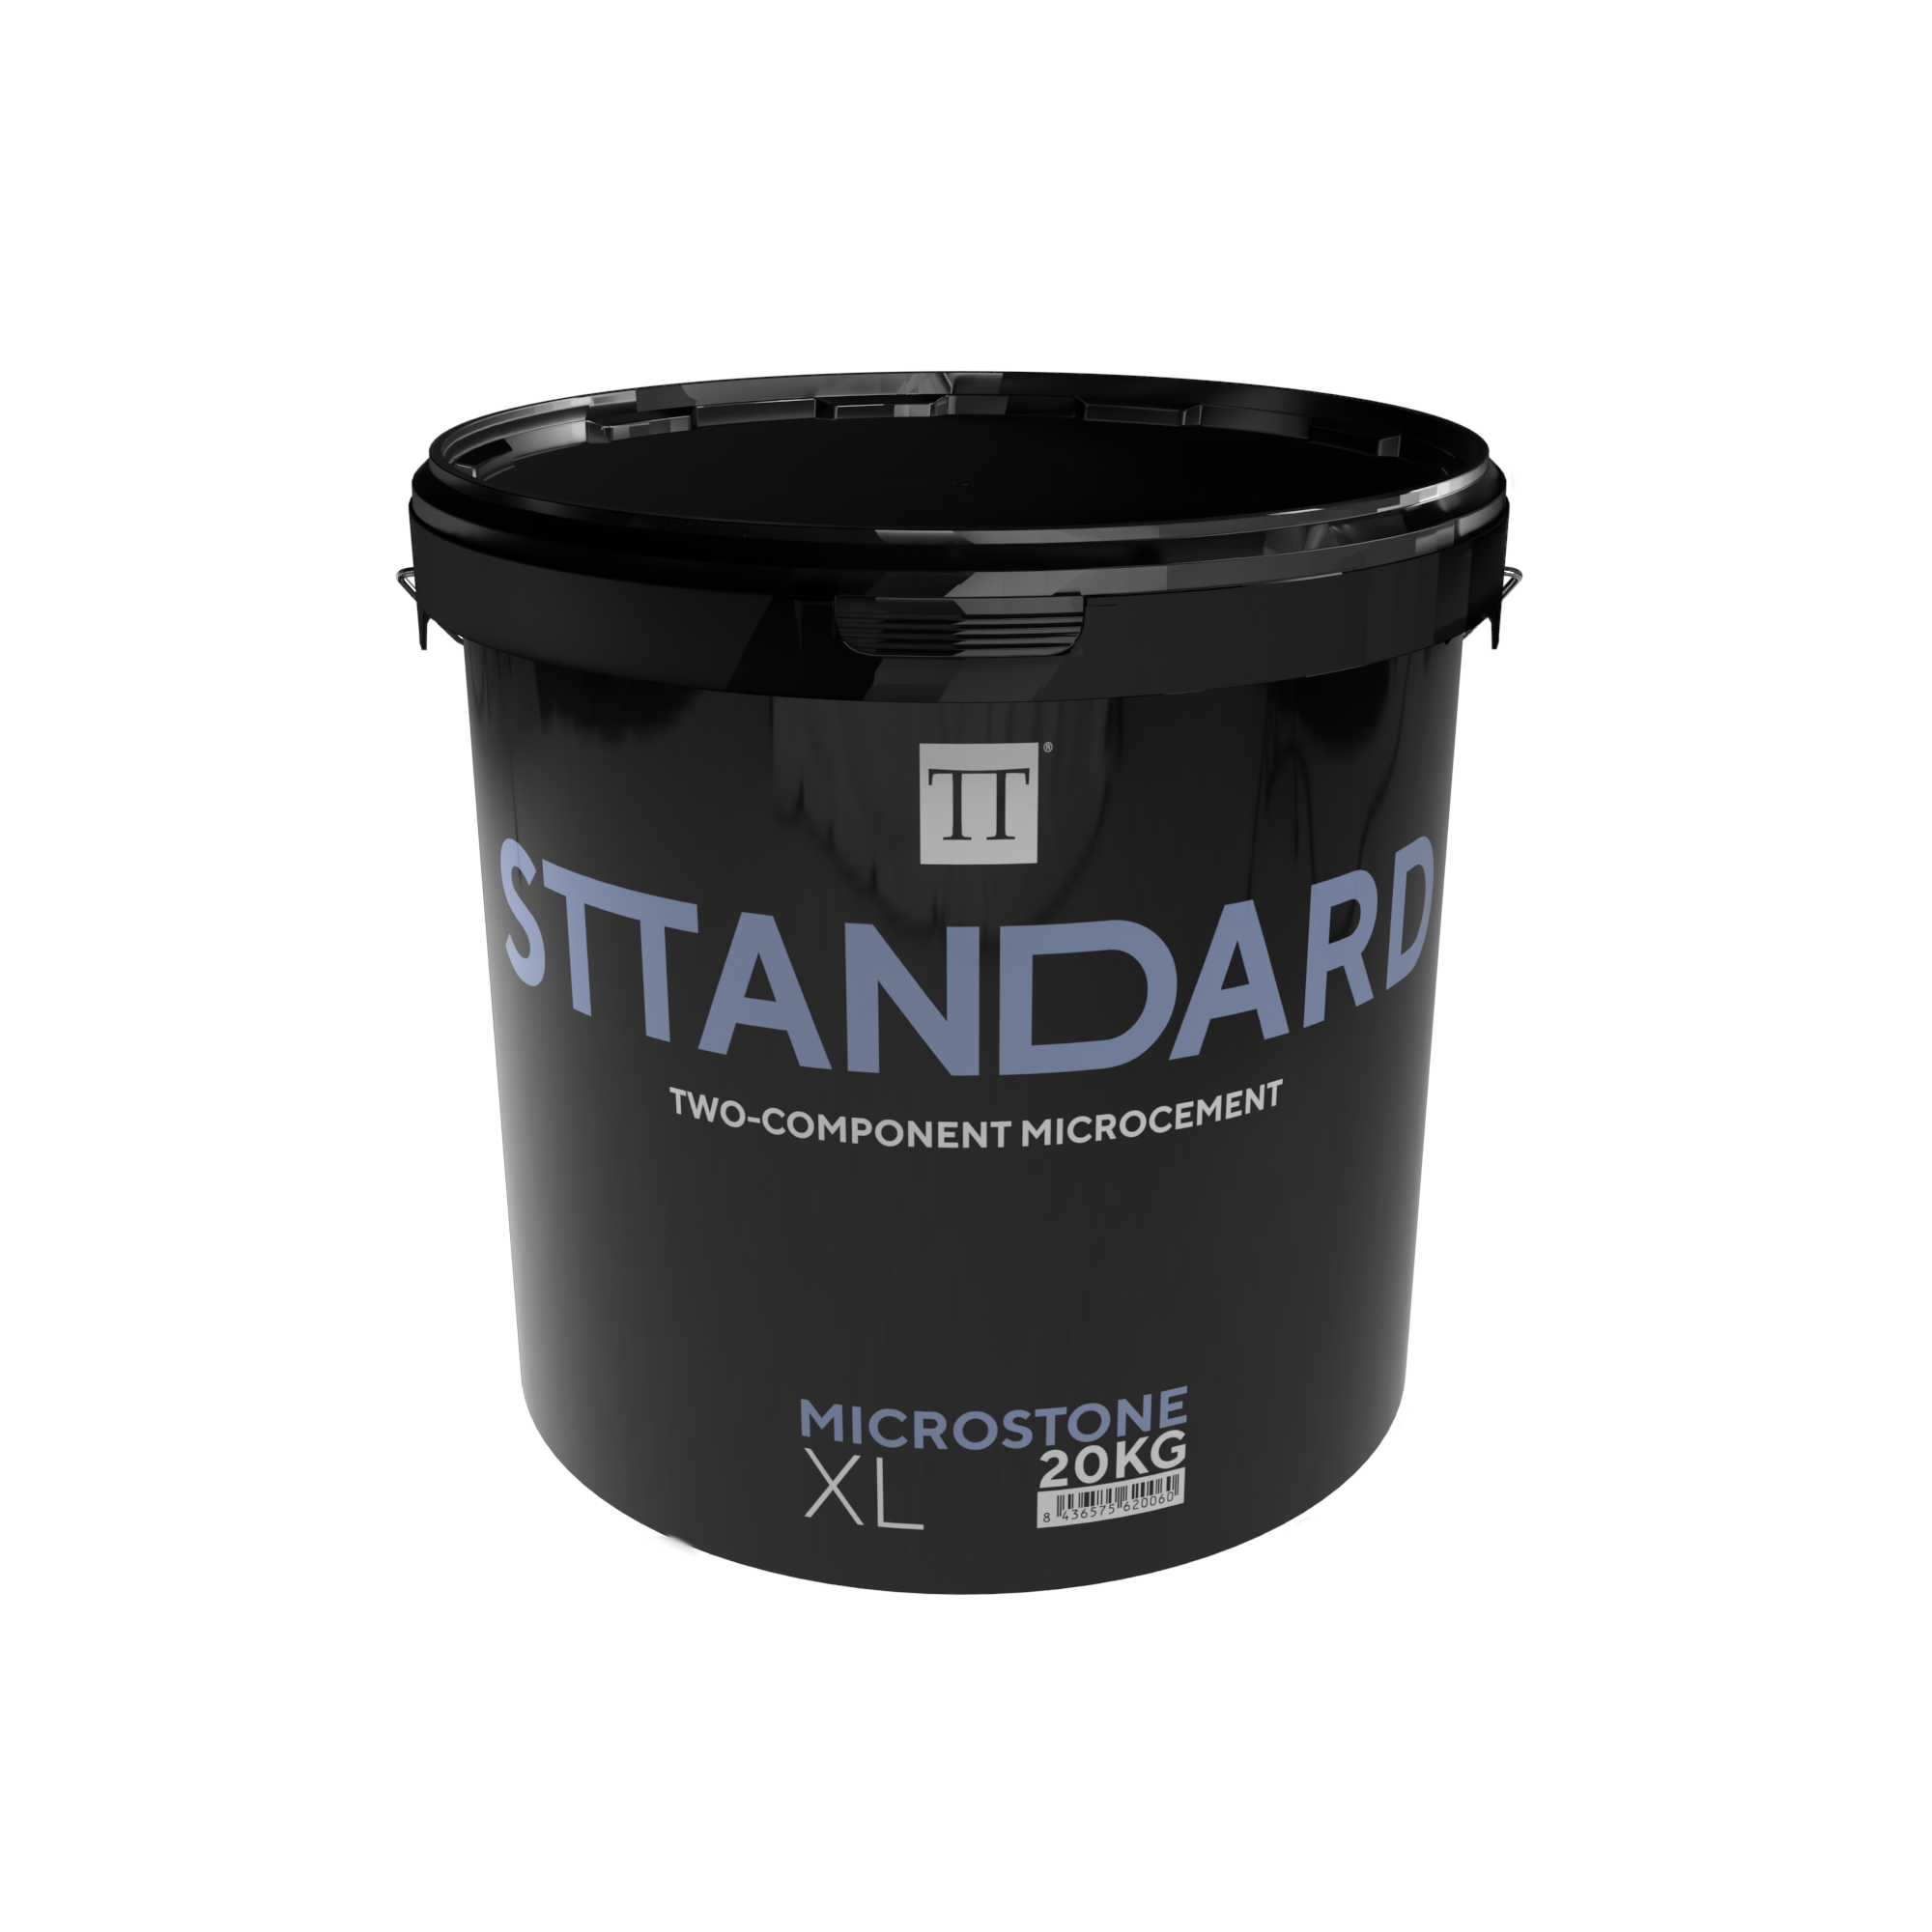 Sttandard Microstone 20 Kg